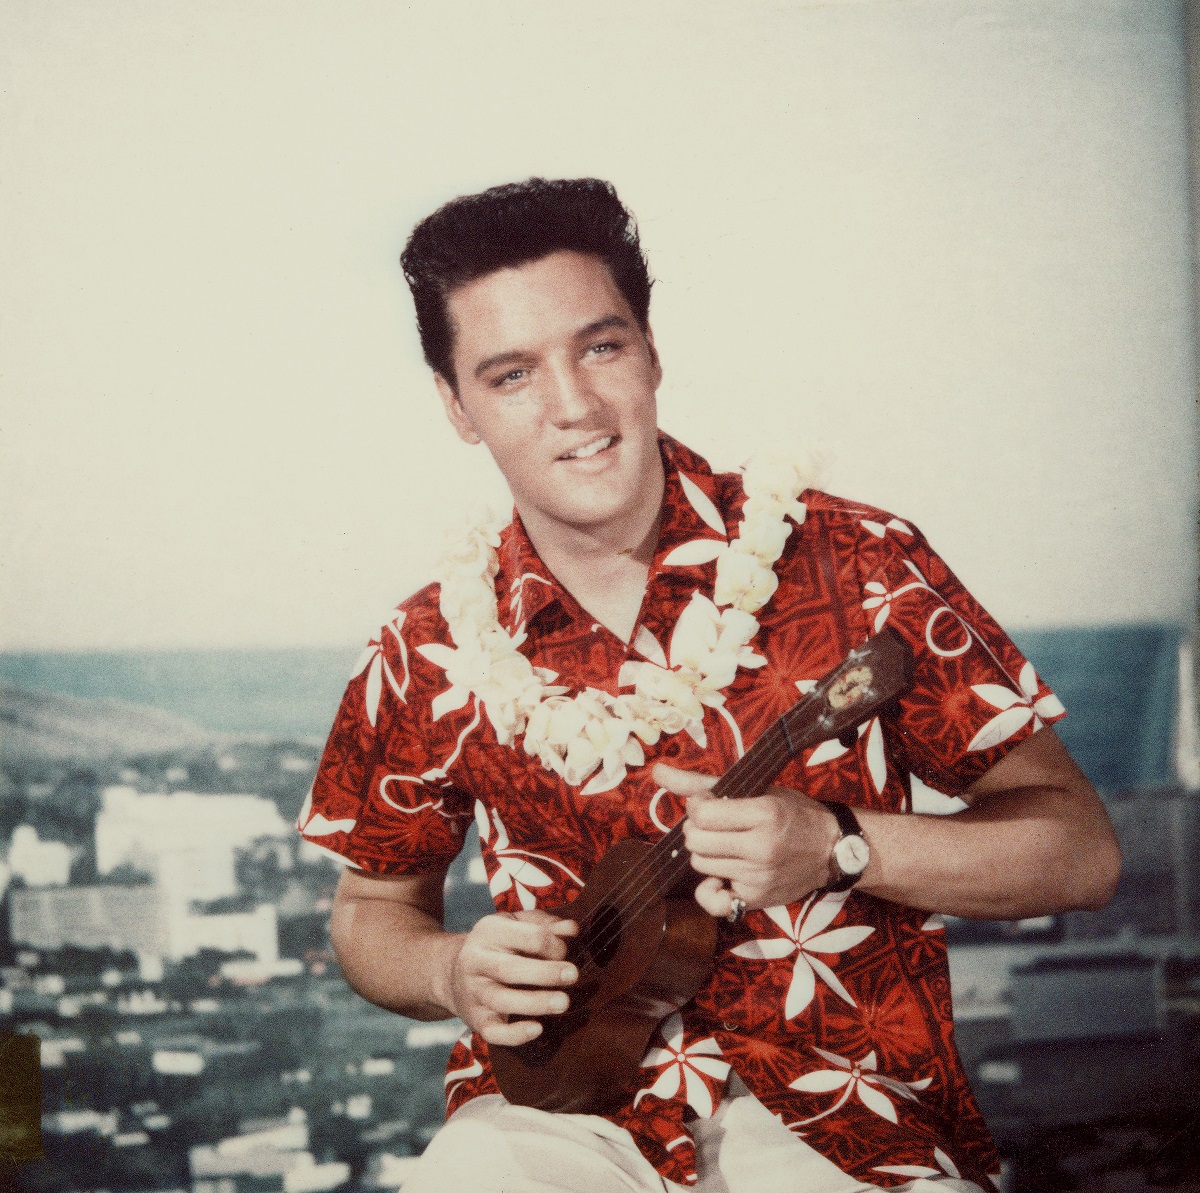 Elvis Presley with a ukelele